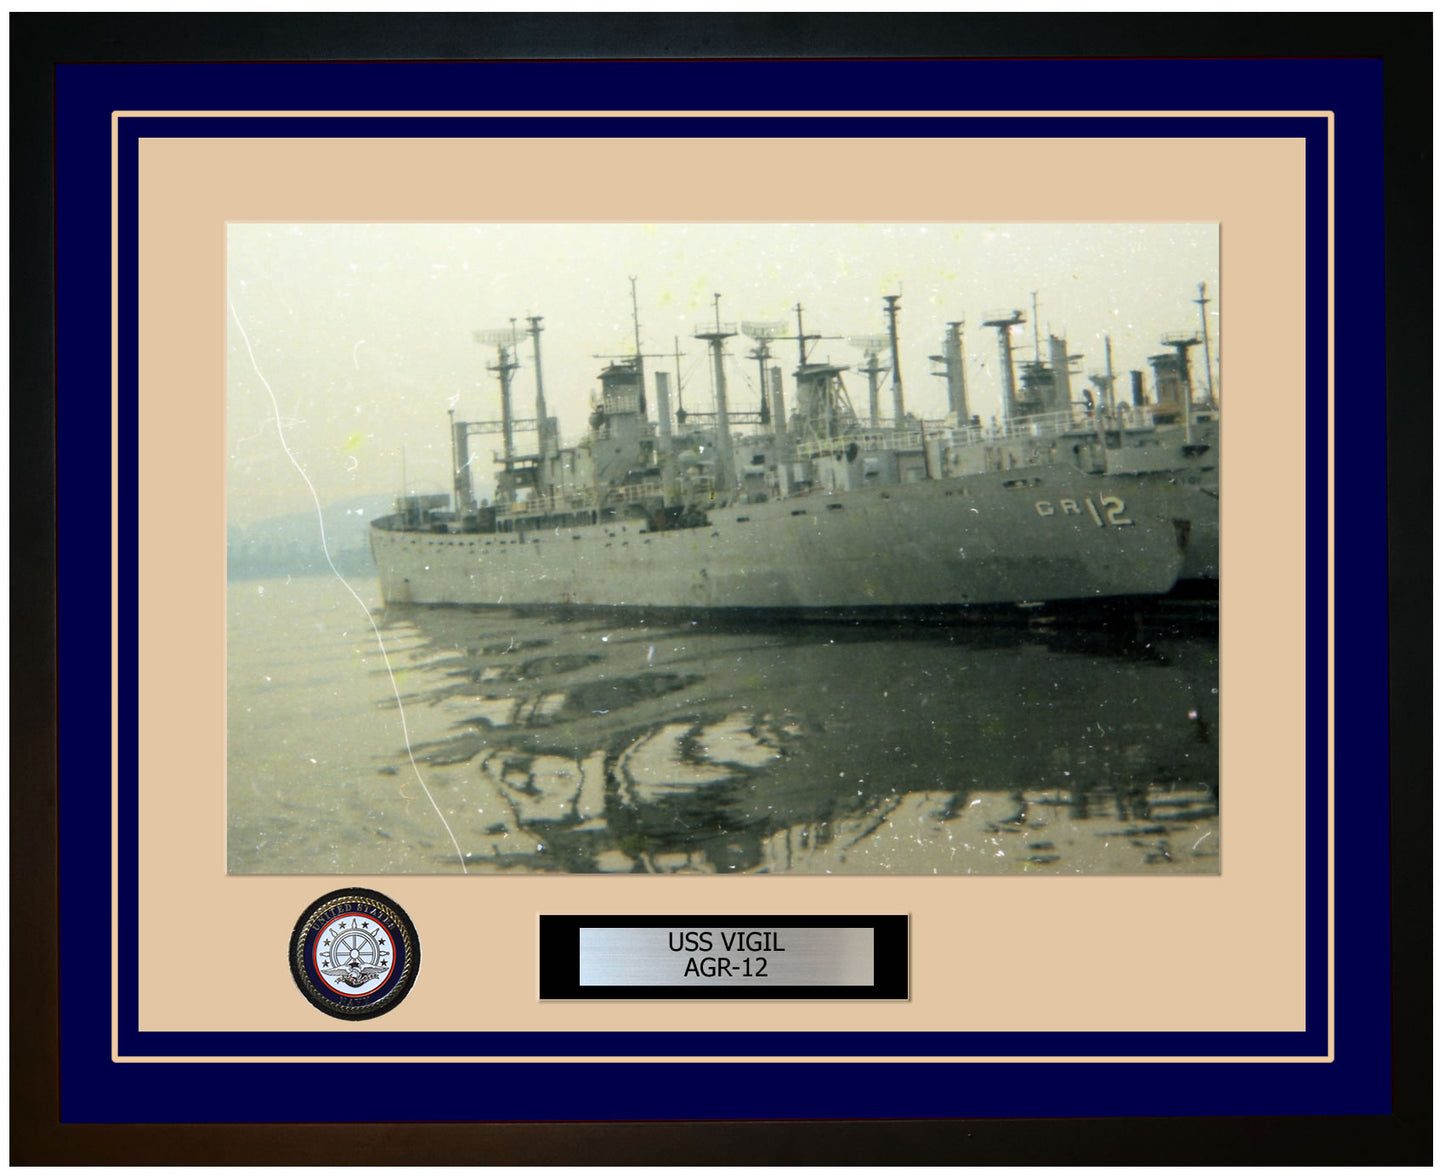 USS VIGIL AGR-12 Framed Navy Ship Photo Blue